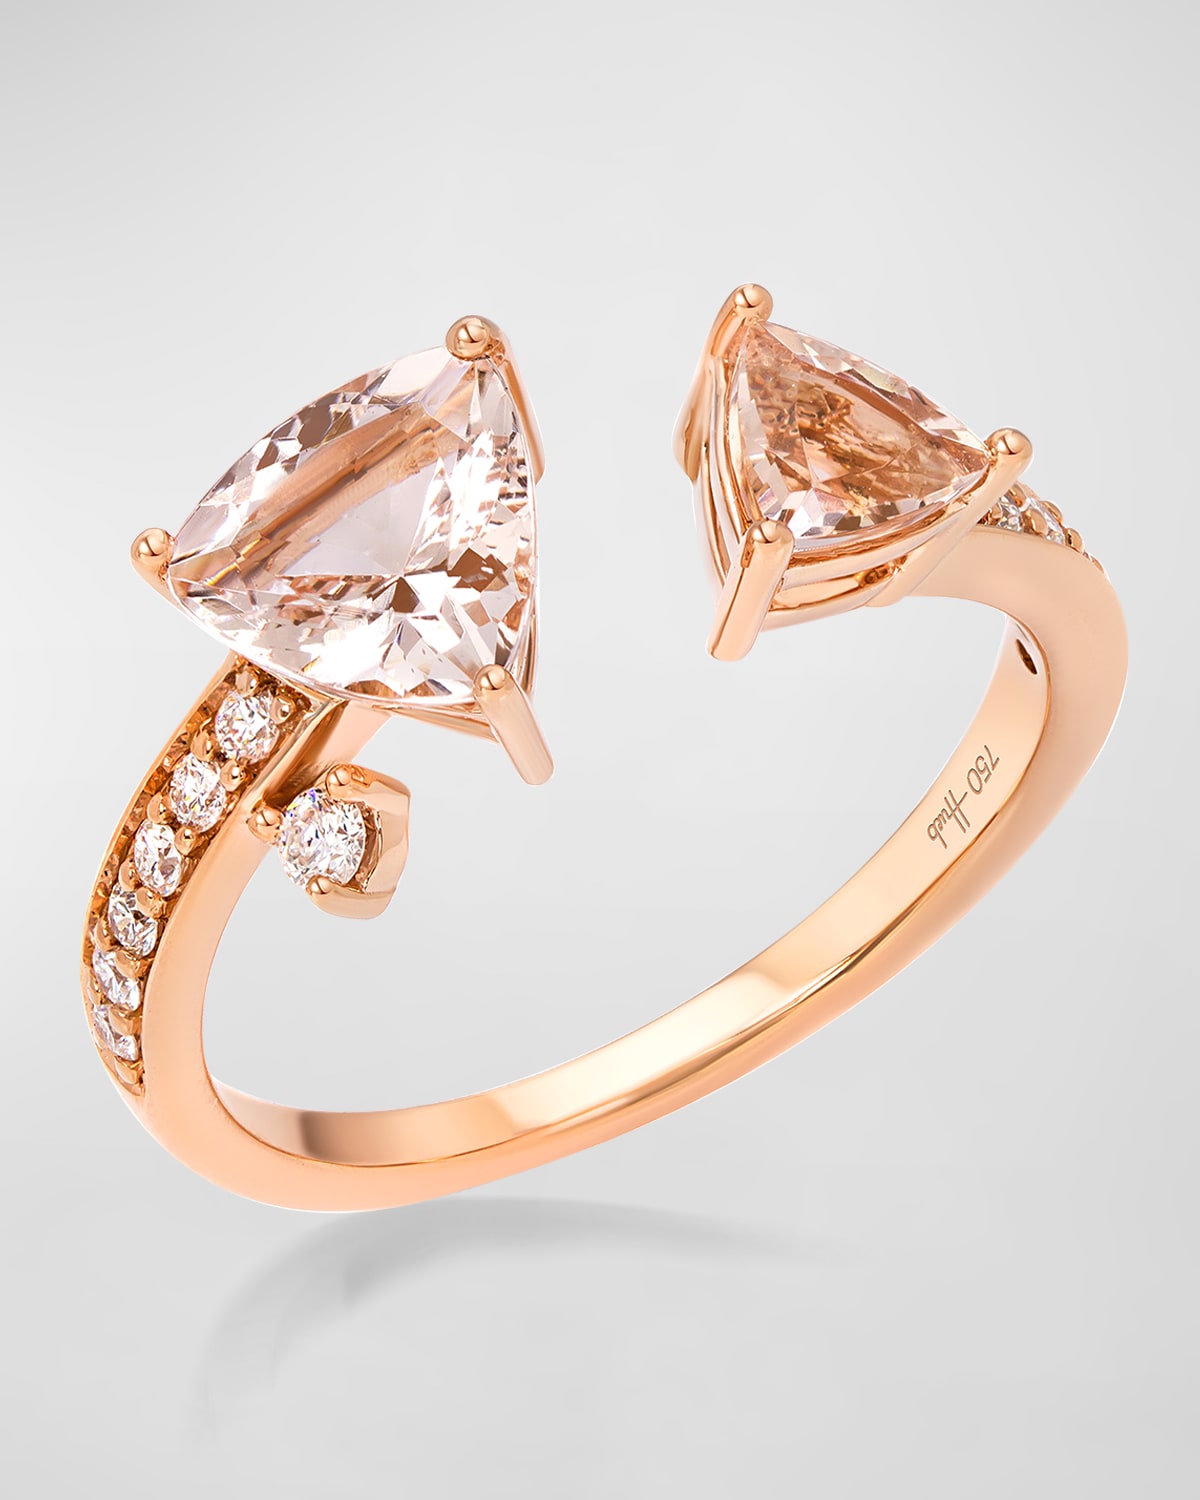 Hueb 18K Mirage Pink Gold Ring with VS/GH Diamonds and Rose Morganite